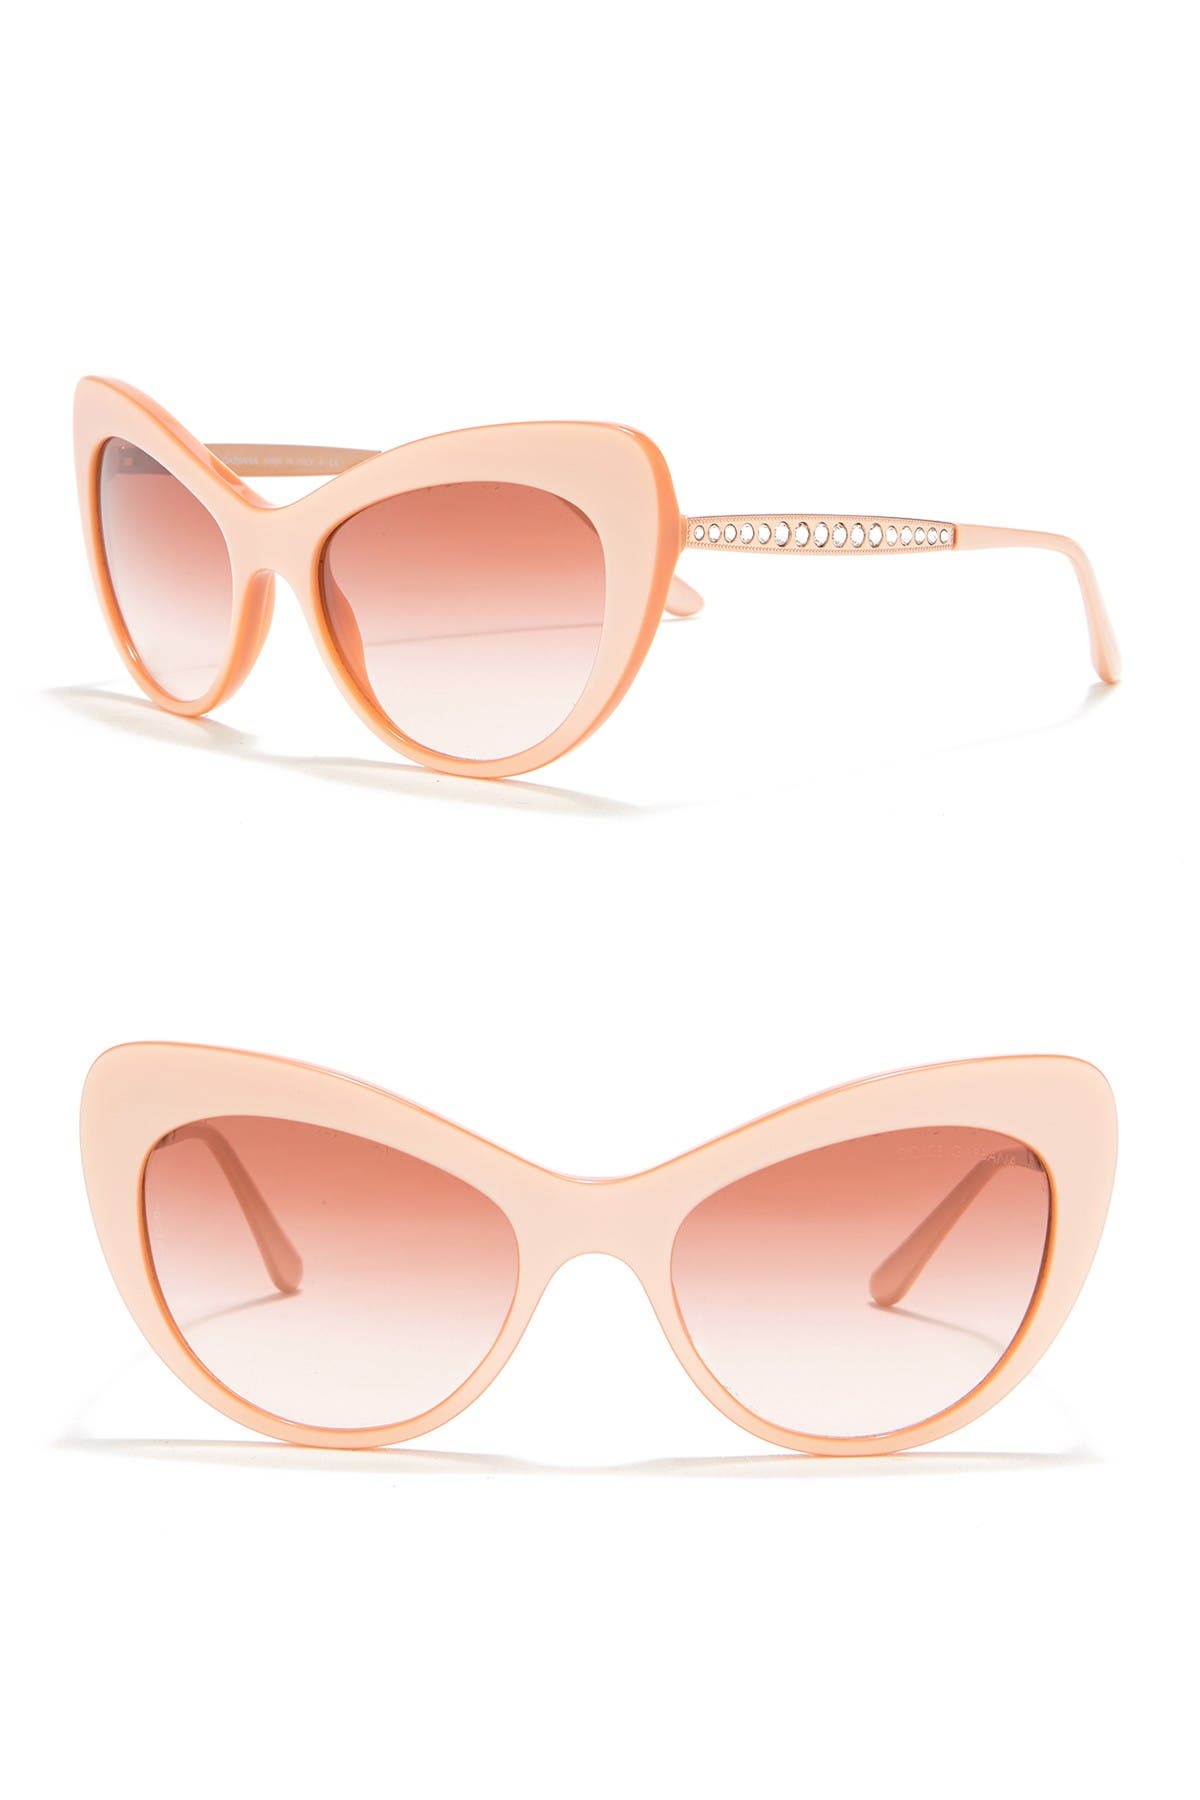 dolce & gabbana 52mm cat eye sunglasses